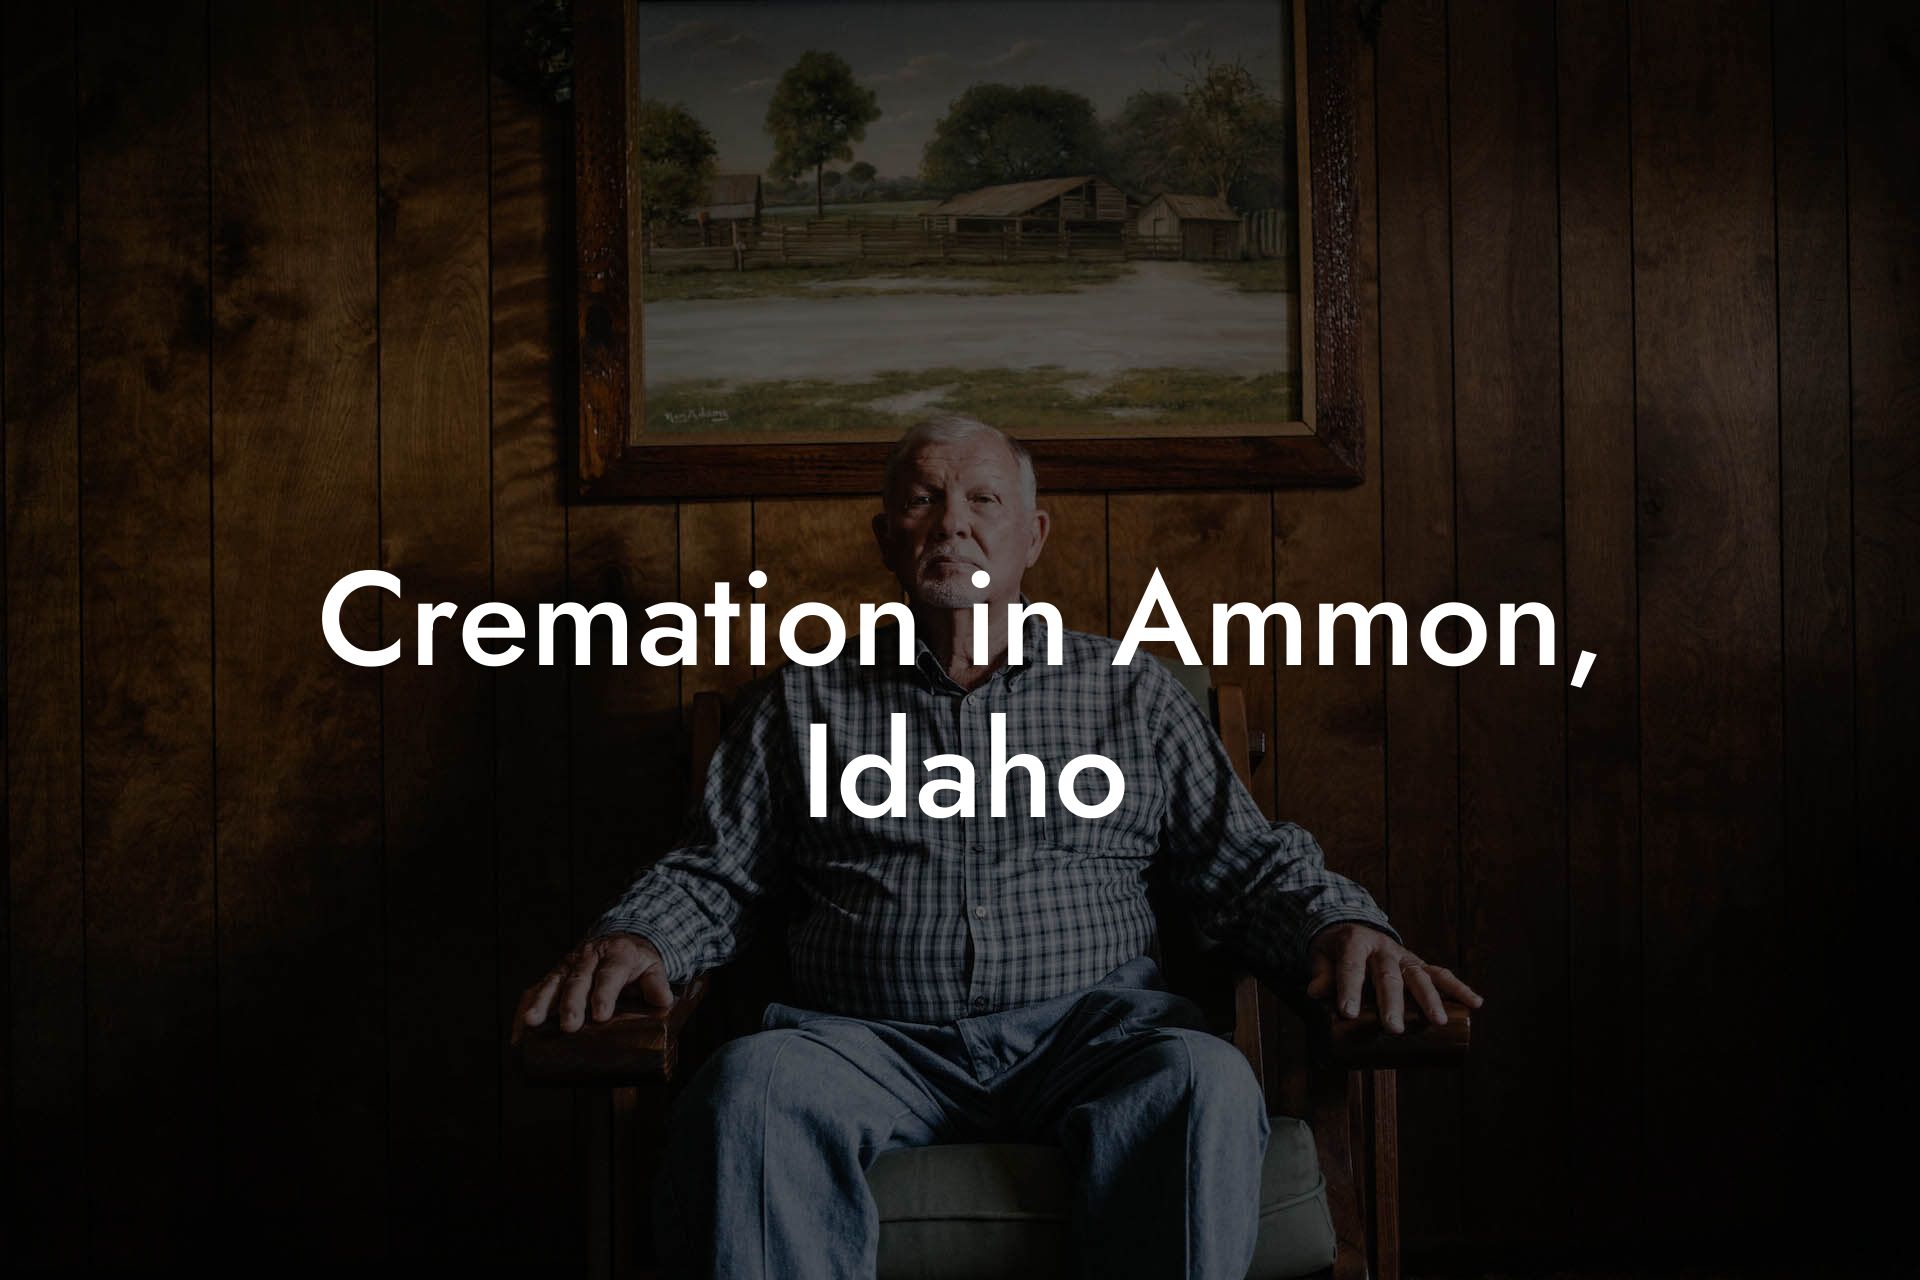 Cremation in Ammon, Idaho